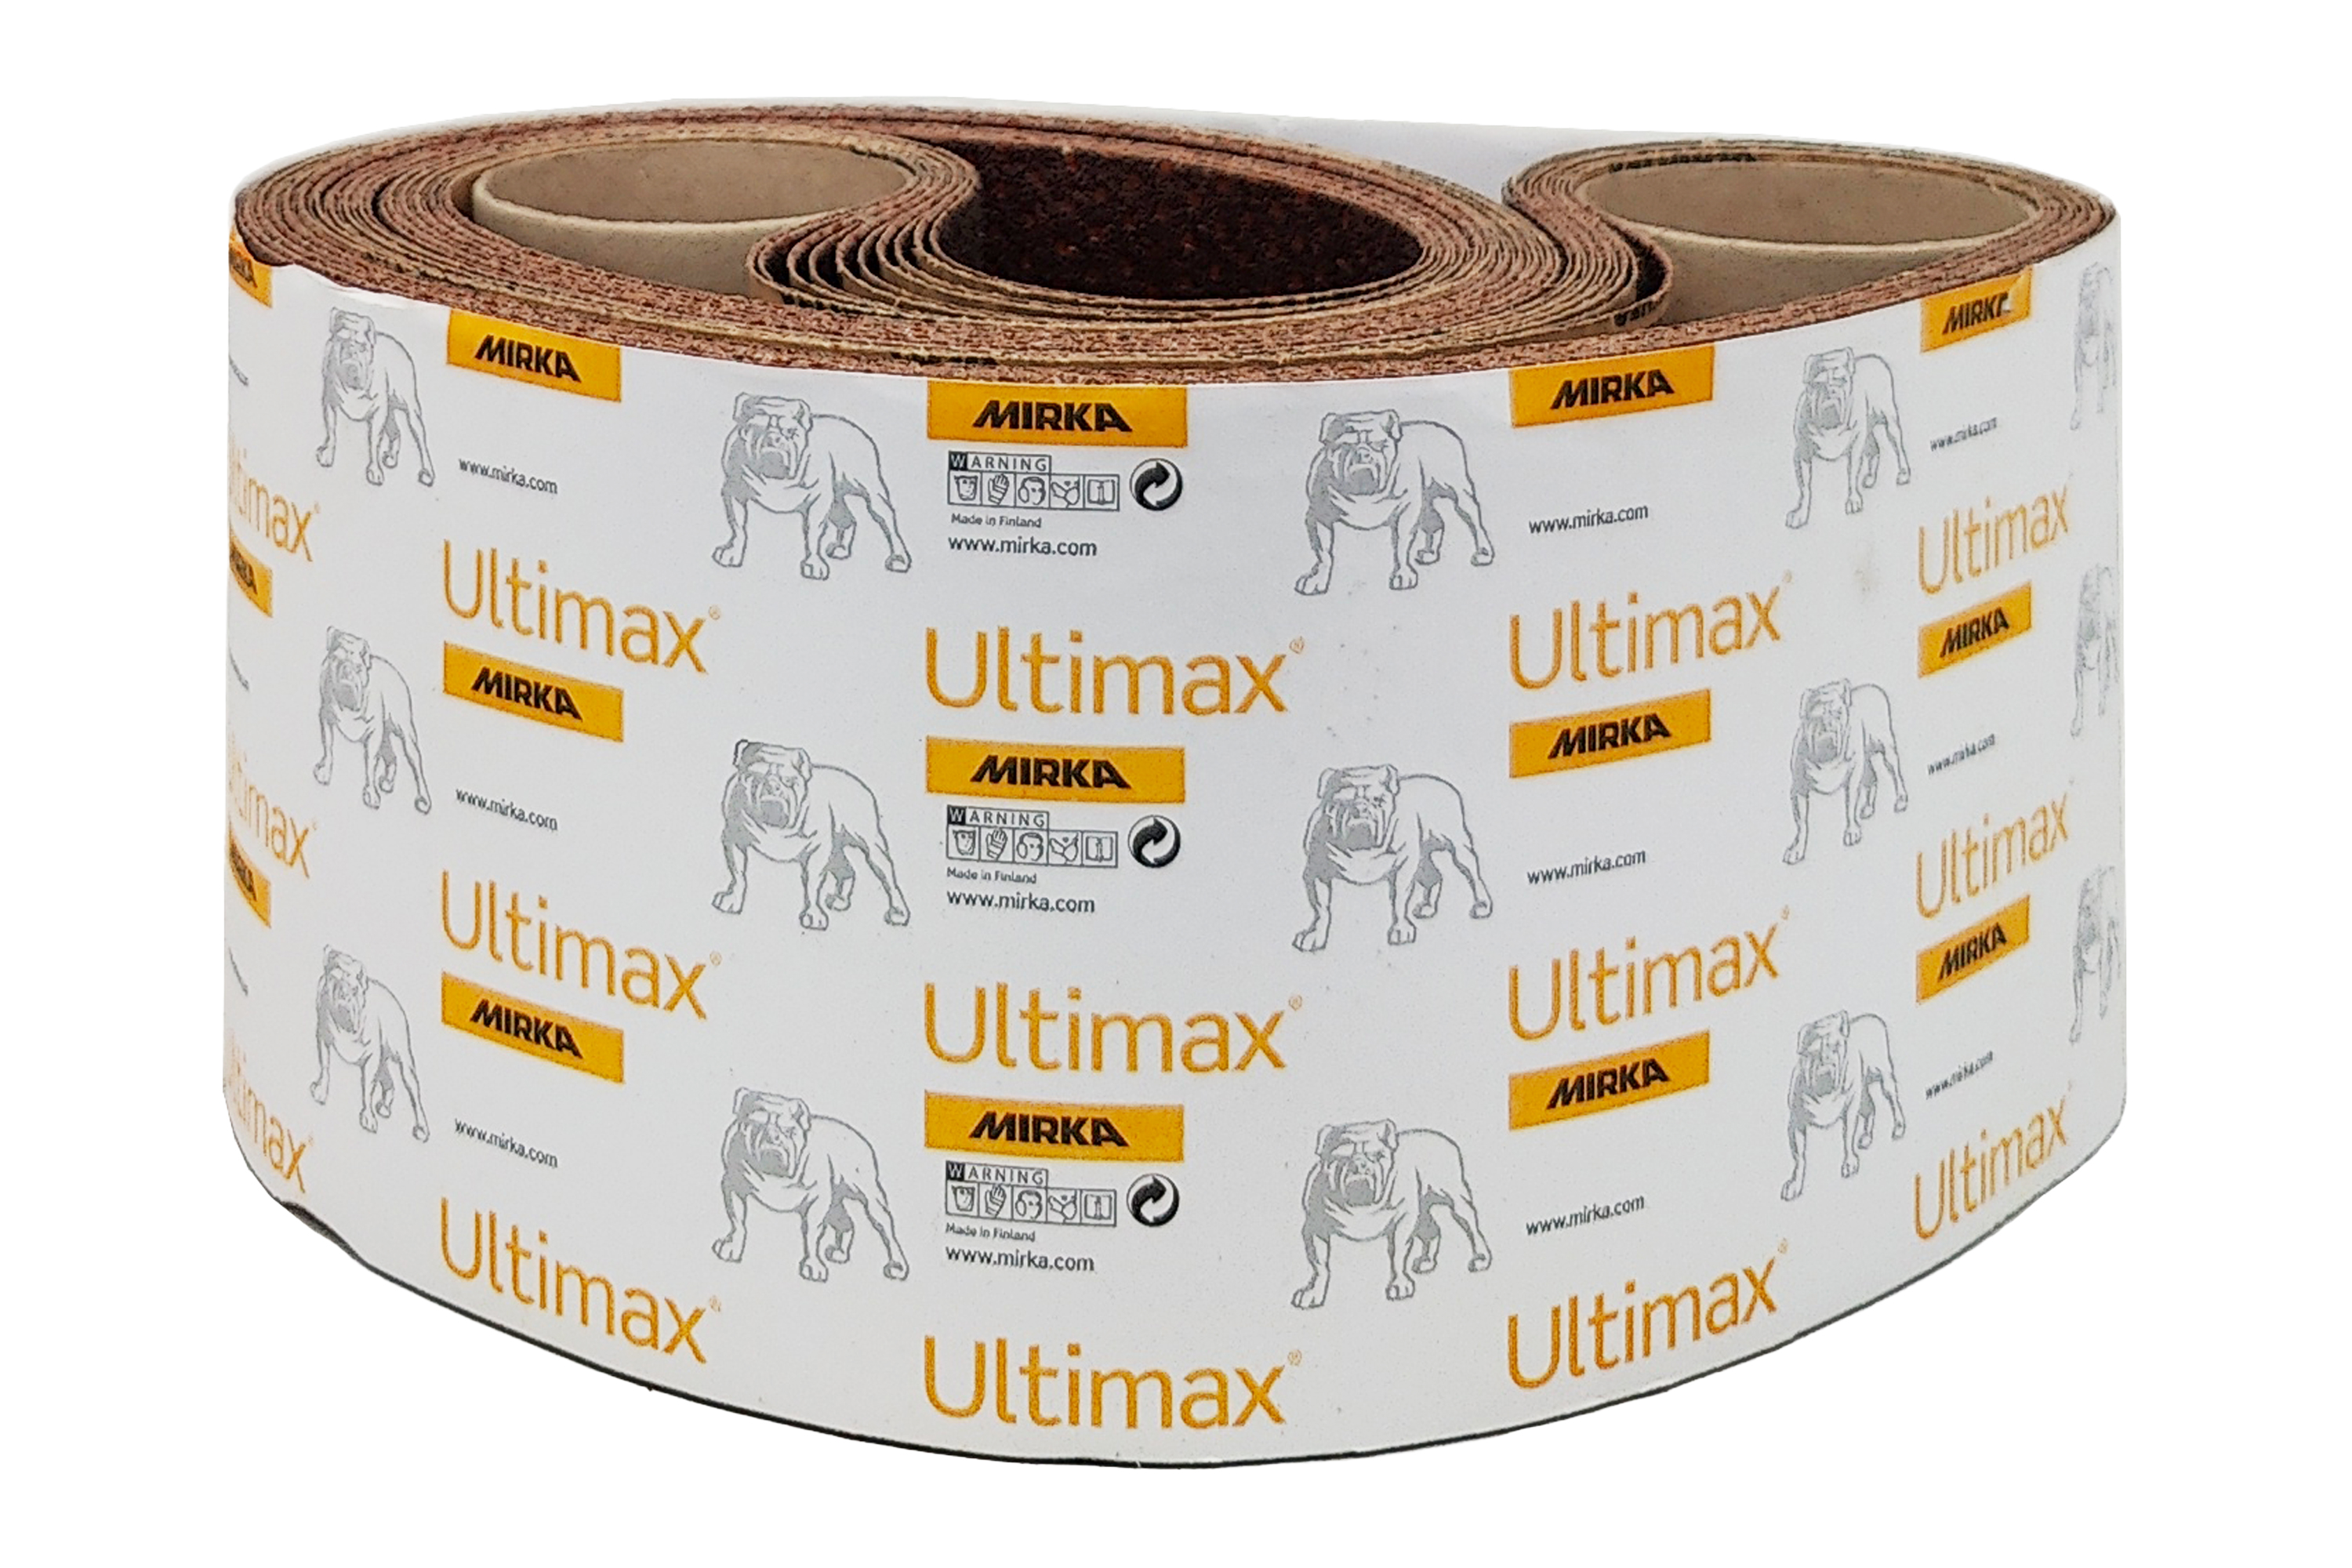 Abbildung Mirka Ultimax 150x7800mm mit Verpackung.